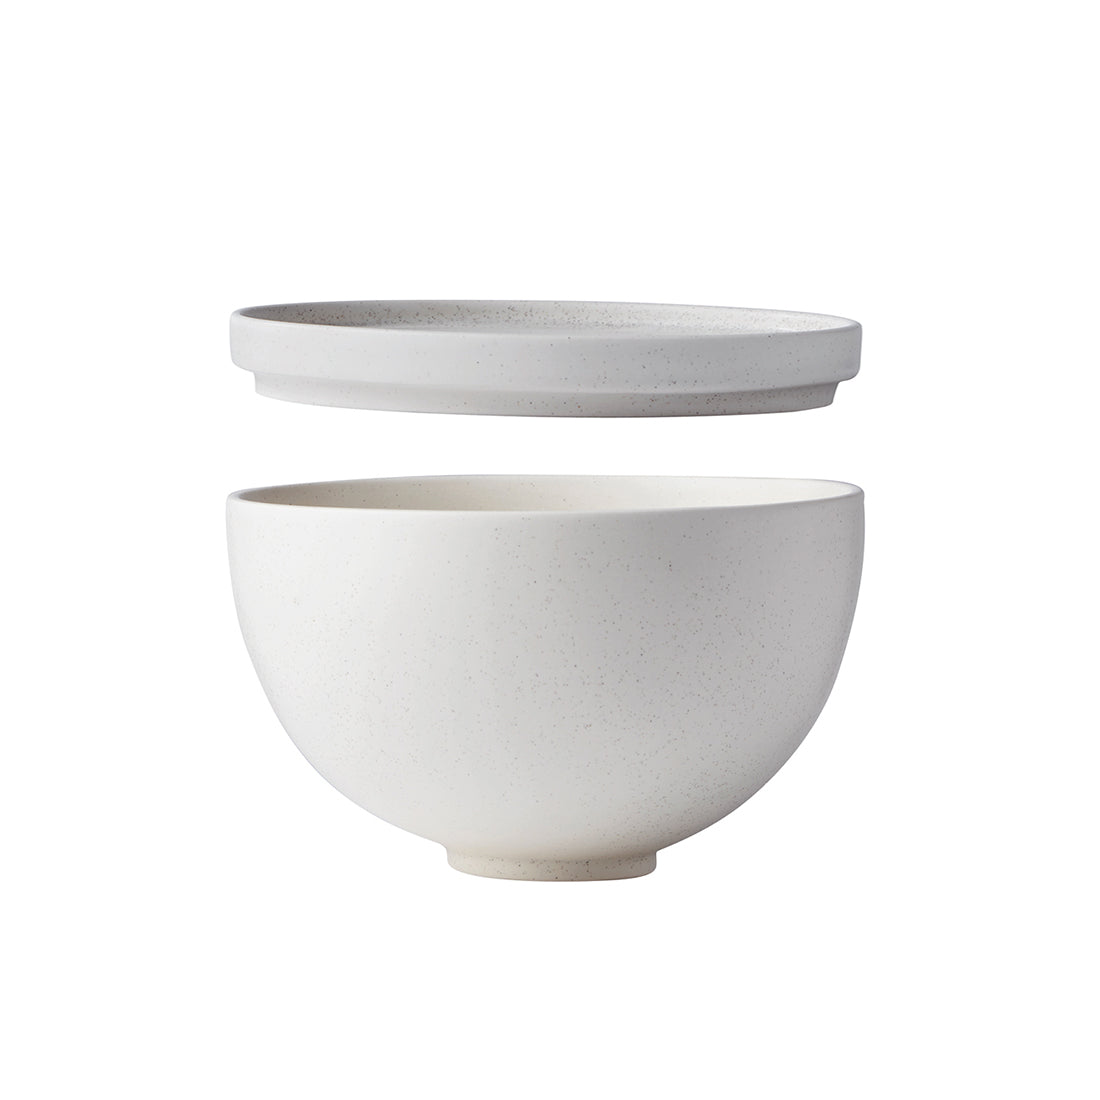 kristina dam studio setomono bowl set skålesæt stor køb shop online